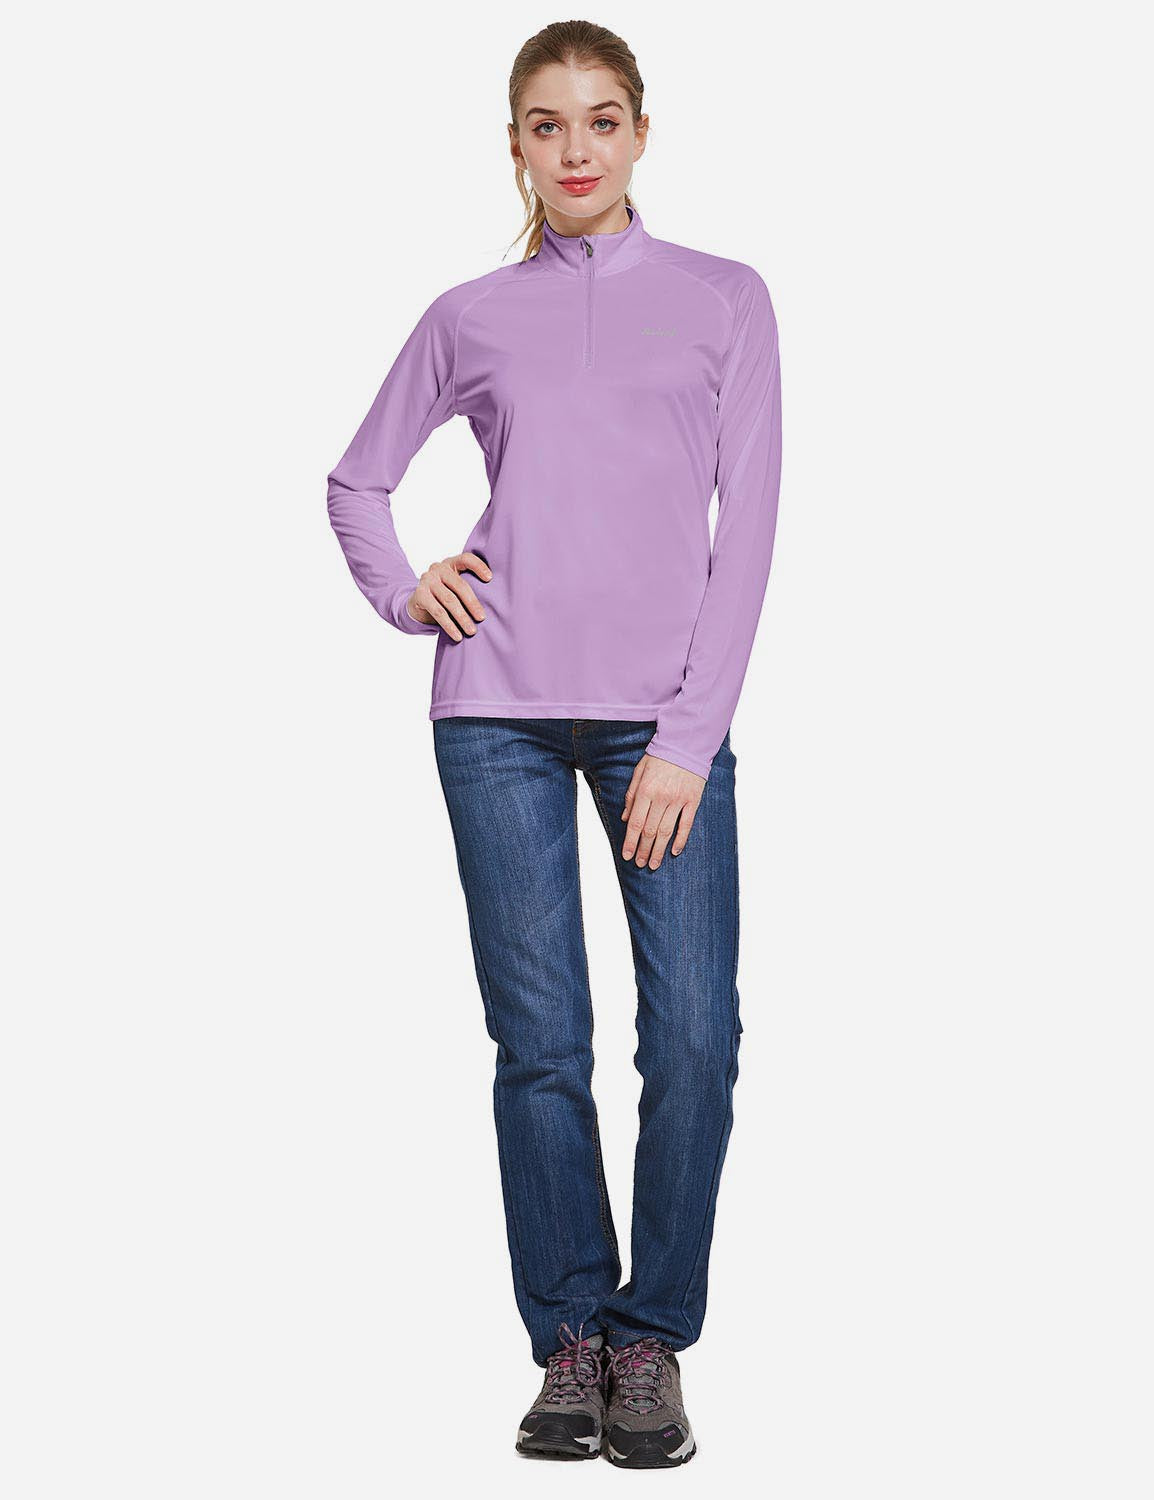 Baleaf Women's UP50+ Collared Long Sleeved Tshirt w Thumbholes aga065 Purple Full